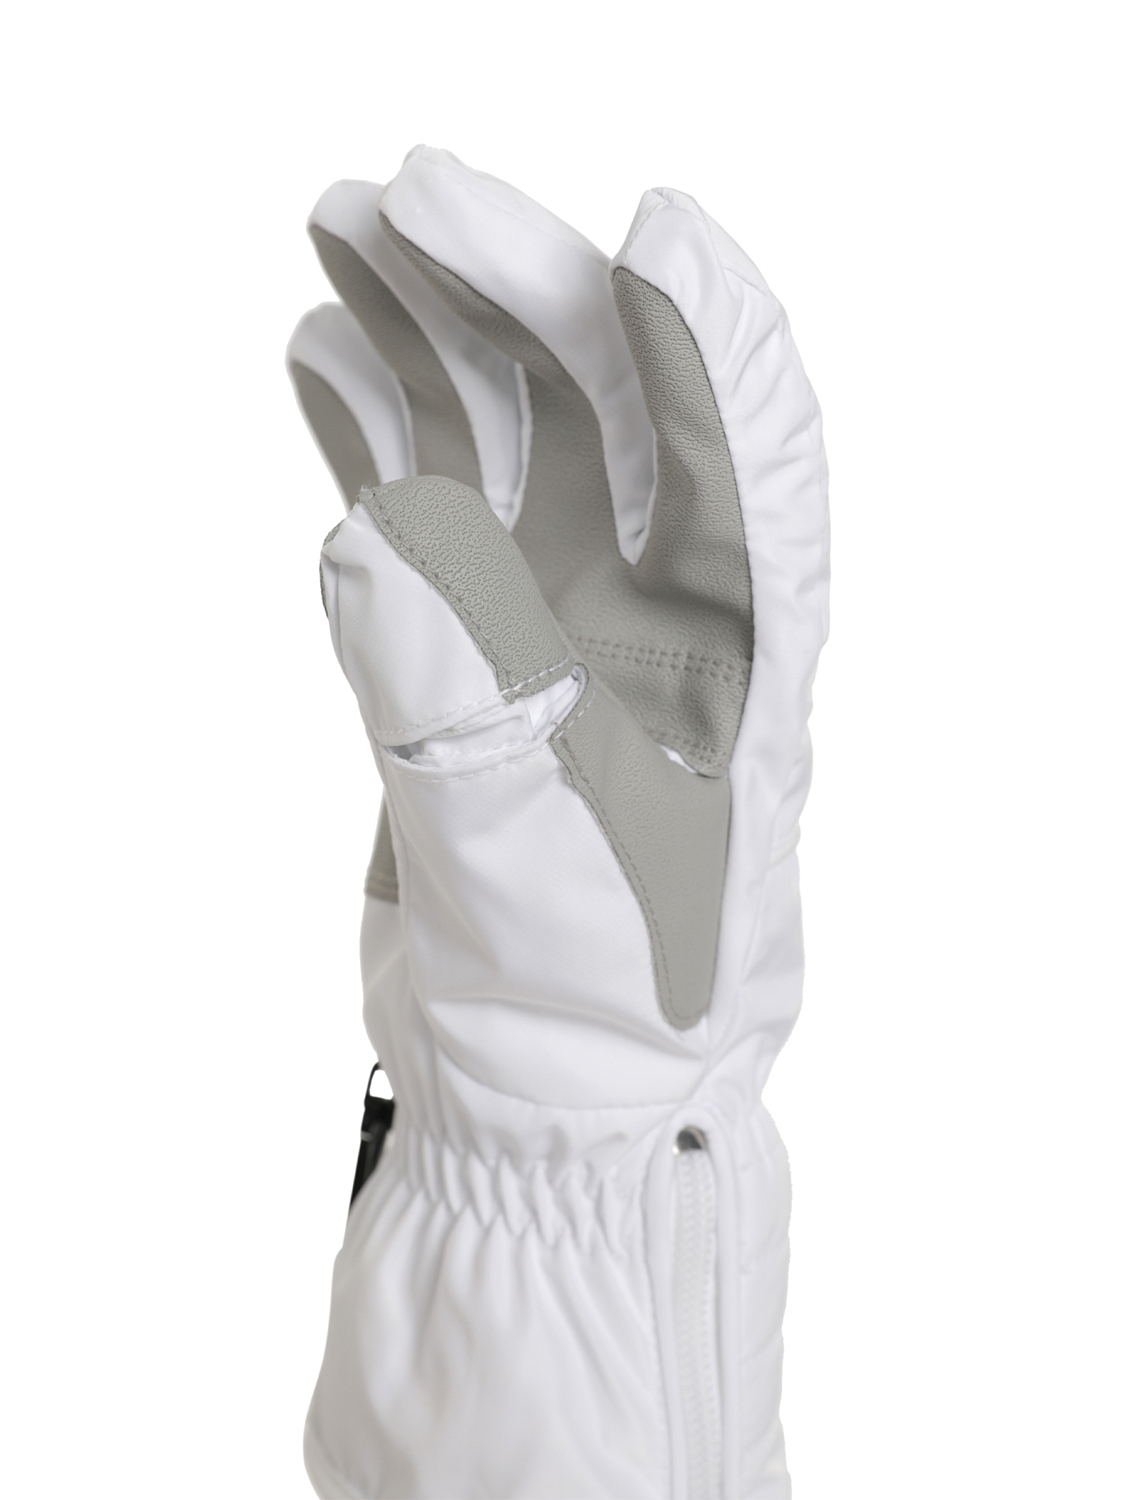 Перчатки Poivre Blanc W22-1070-JRGL White